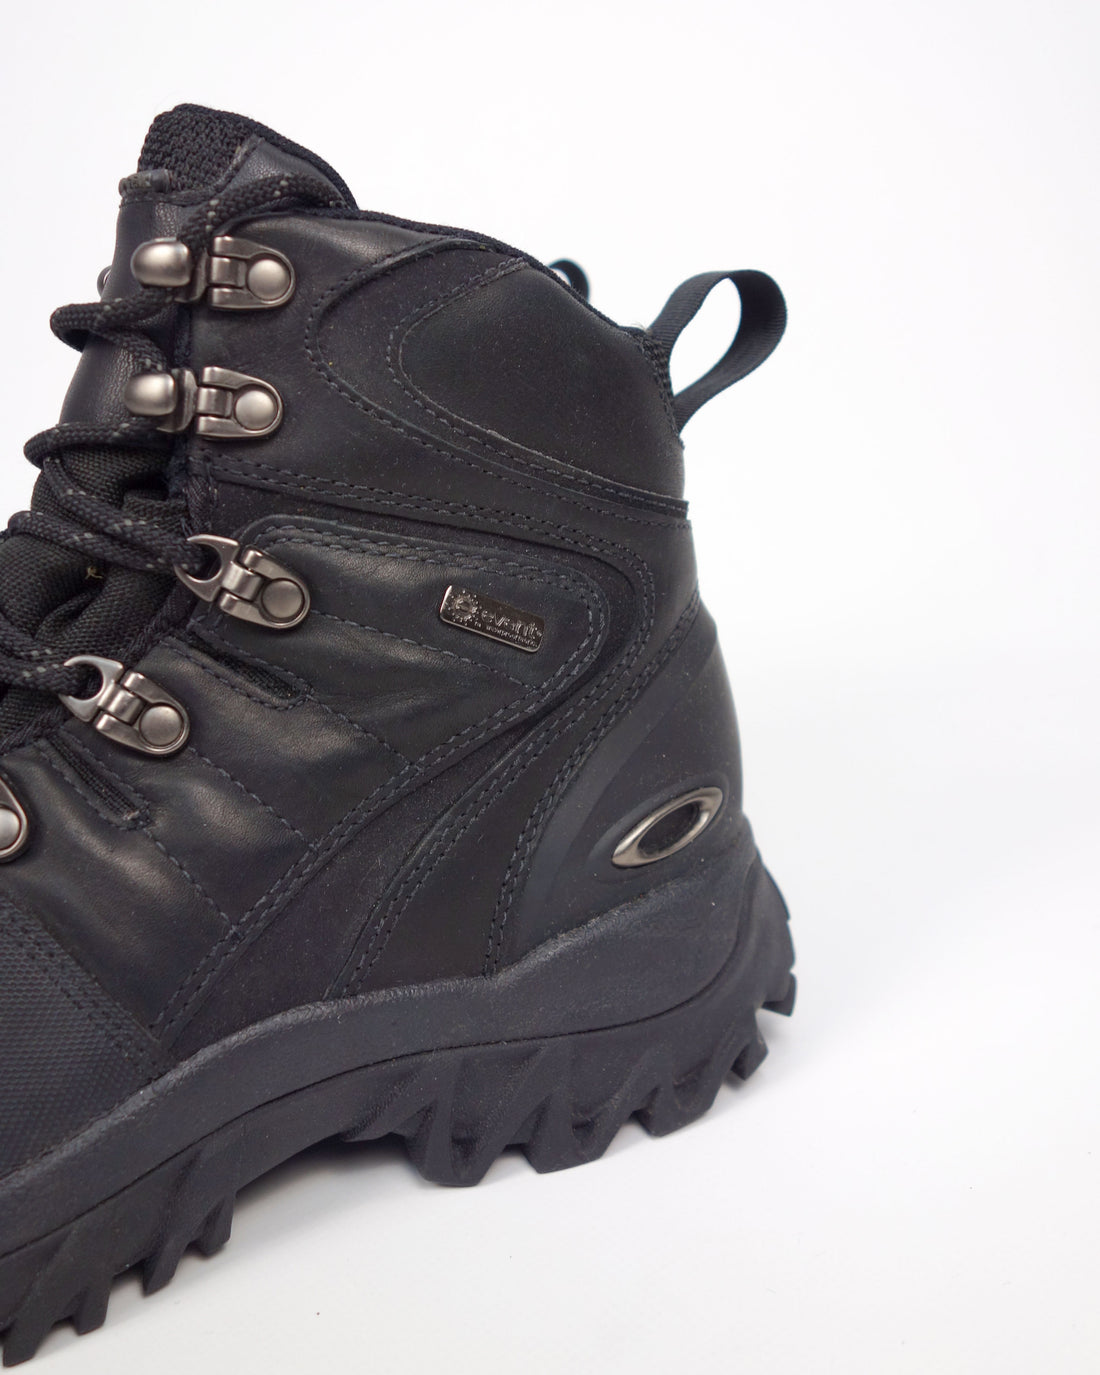 Oakley Assault Leather Black Boots 1990's